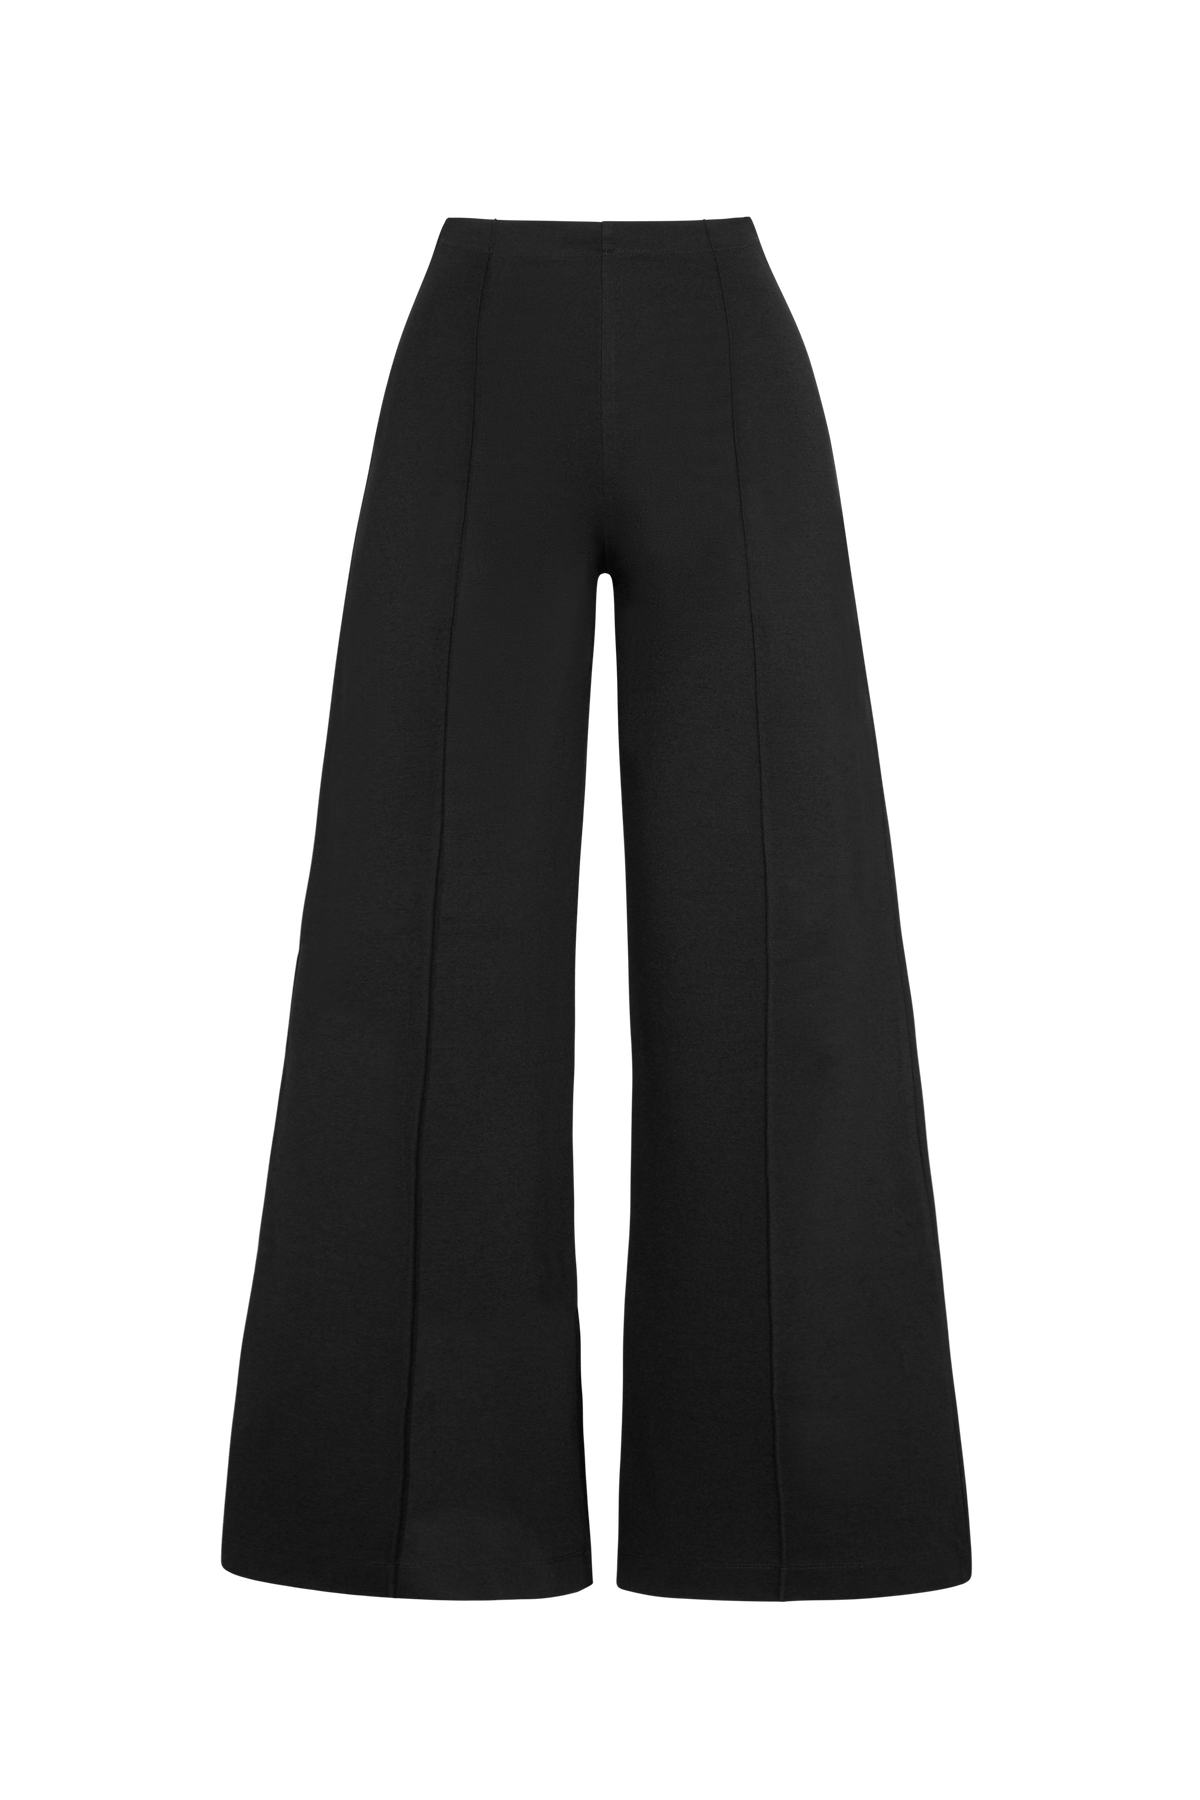 Ladies' Ponte Knit Pant - Black